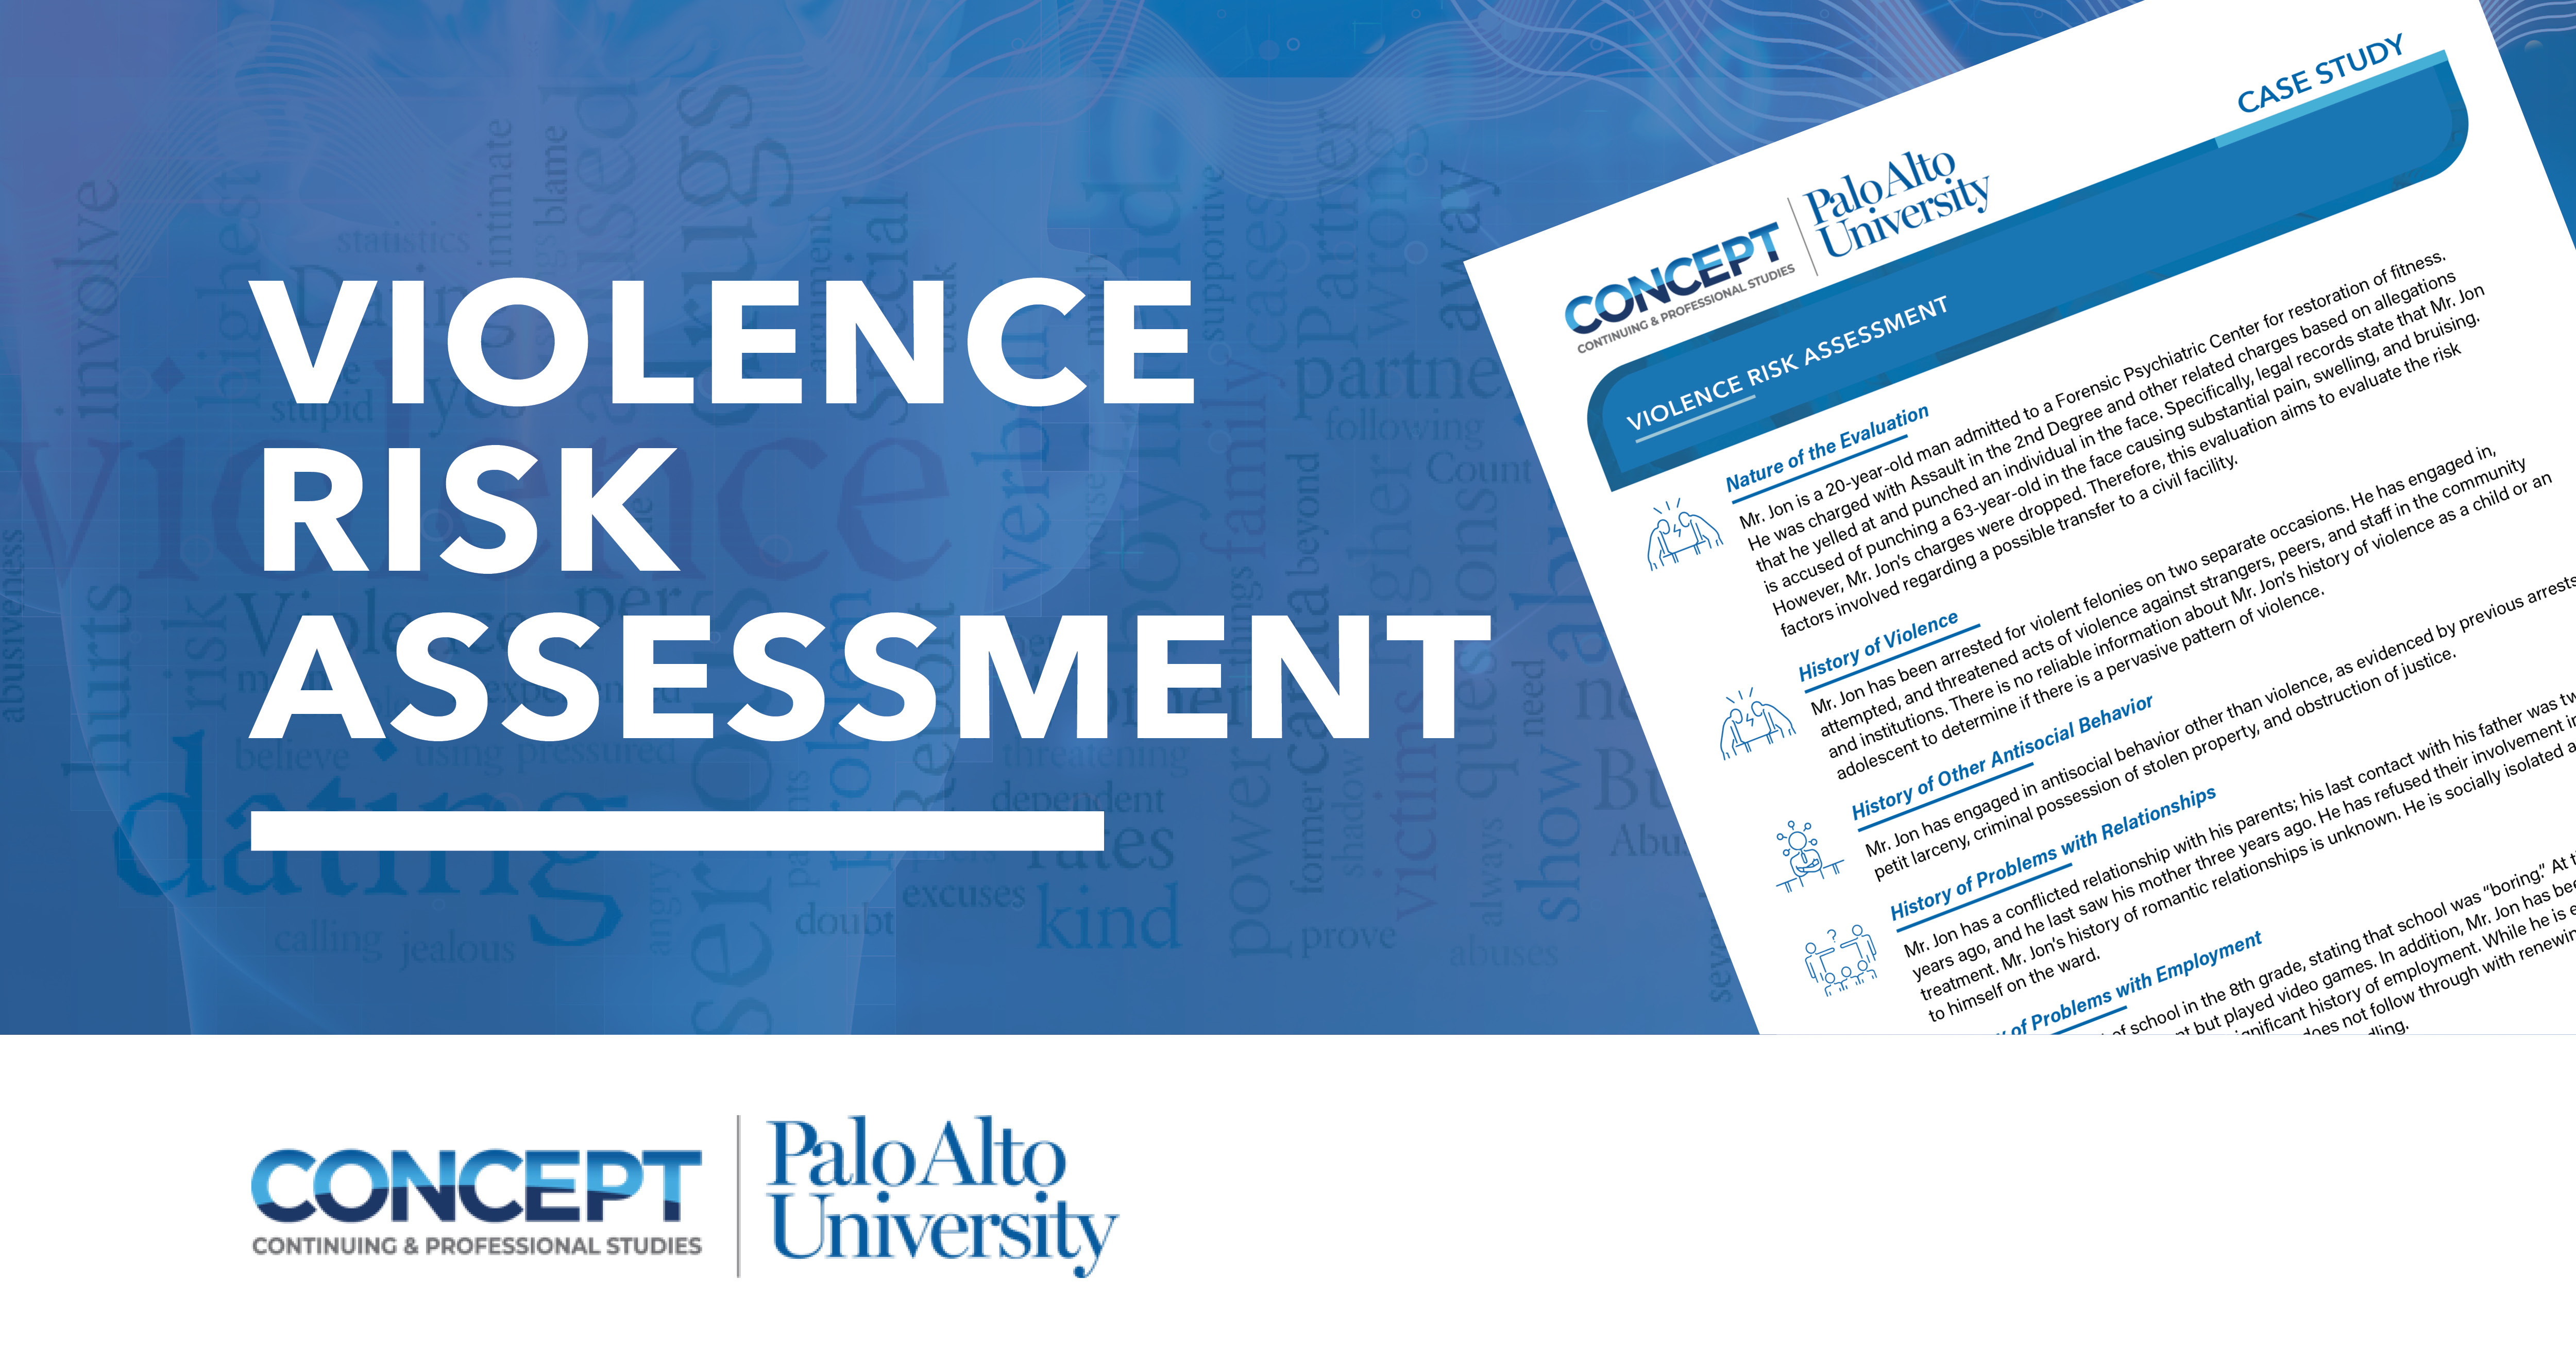 Violence Risk Assessment Case Study: Dangerousness Evaluation using the HCR-20